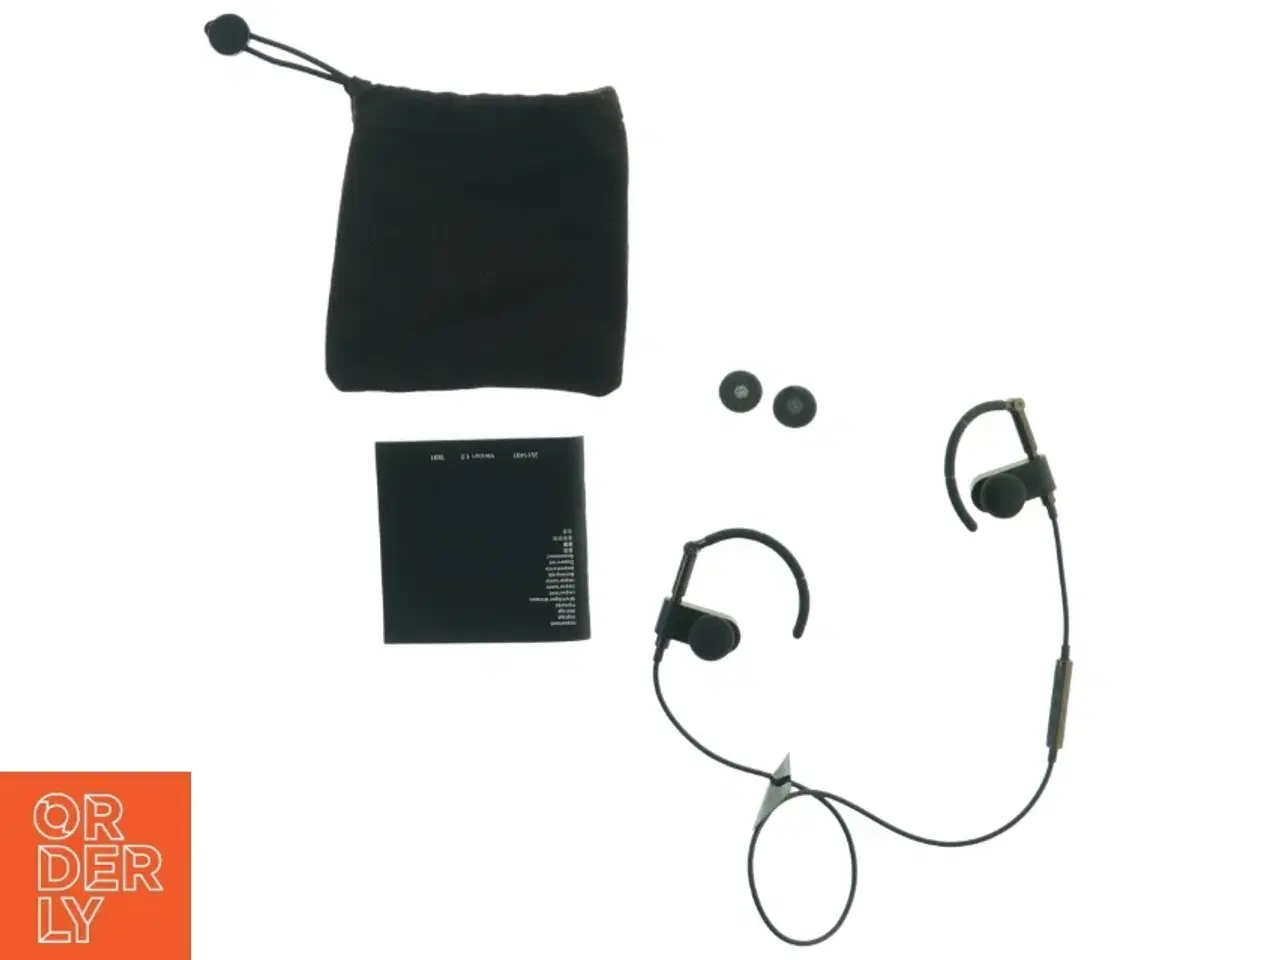 Billede 3 - Høretelefoner/Earset fra B&O (str. 60 x 5 cm)